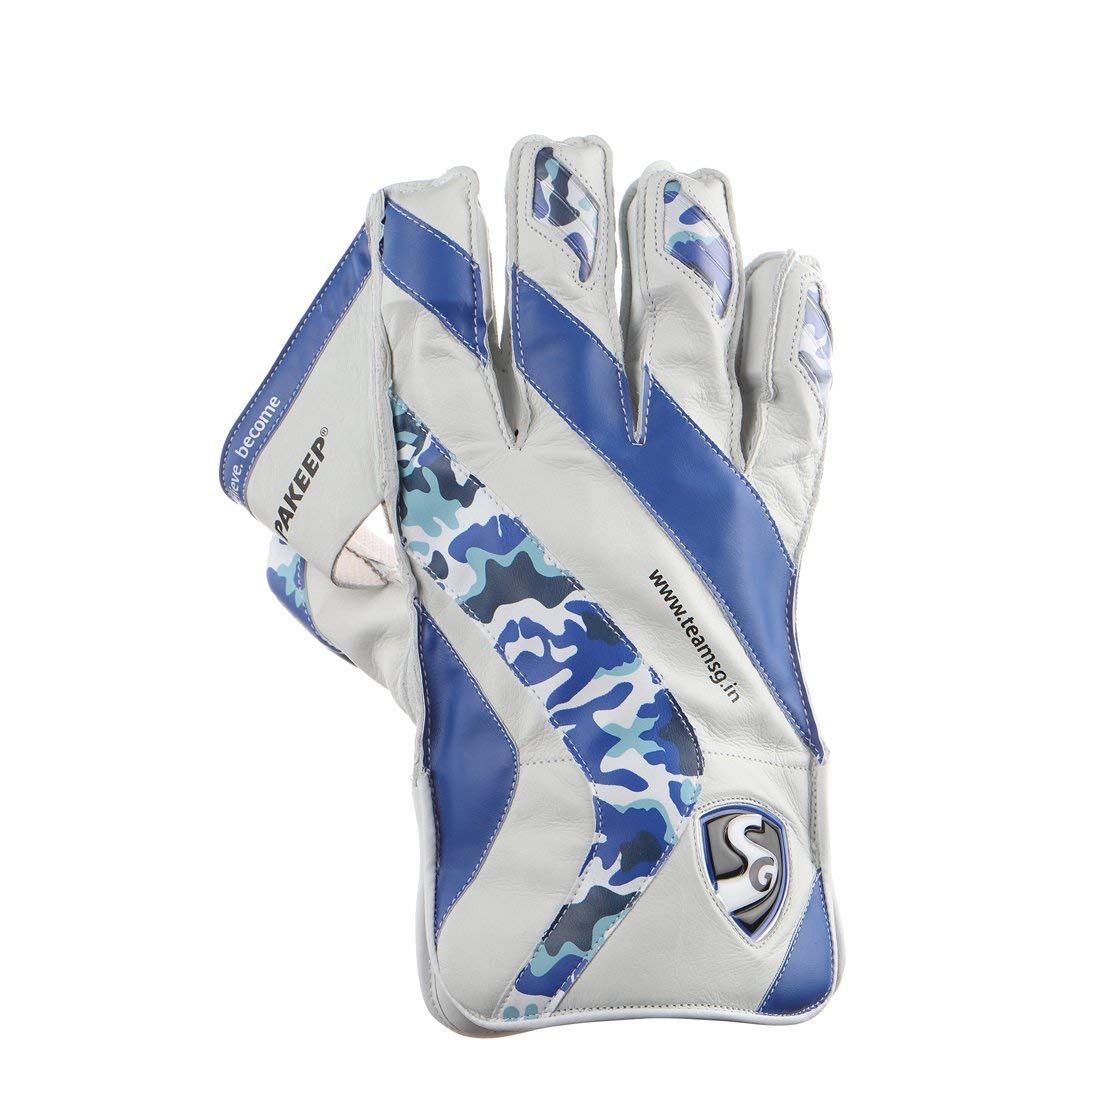 SG Supakeep Wicket Keeping Gloves - Best Price online Prokicksports.com